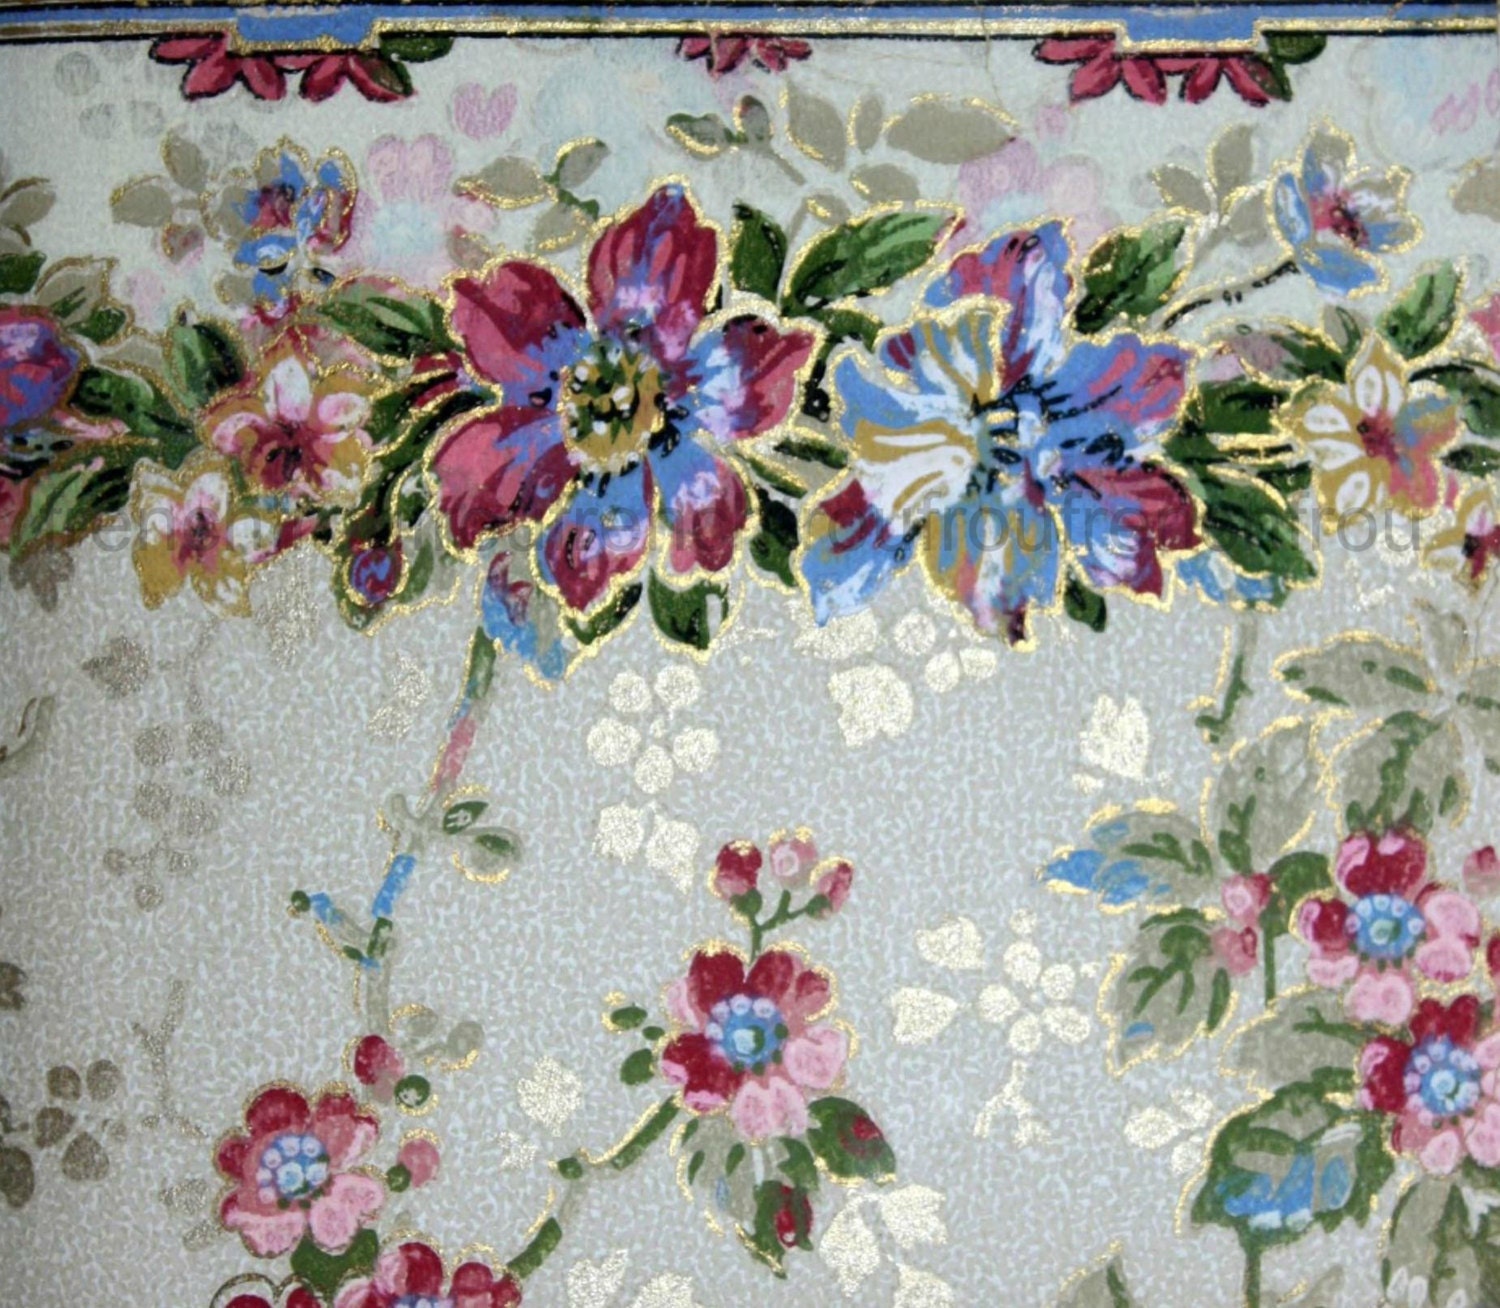 Antique art deco wallpaper design floral pattern illustration | Etsy